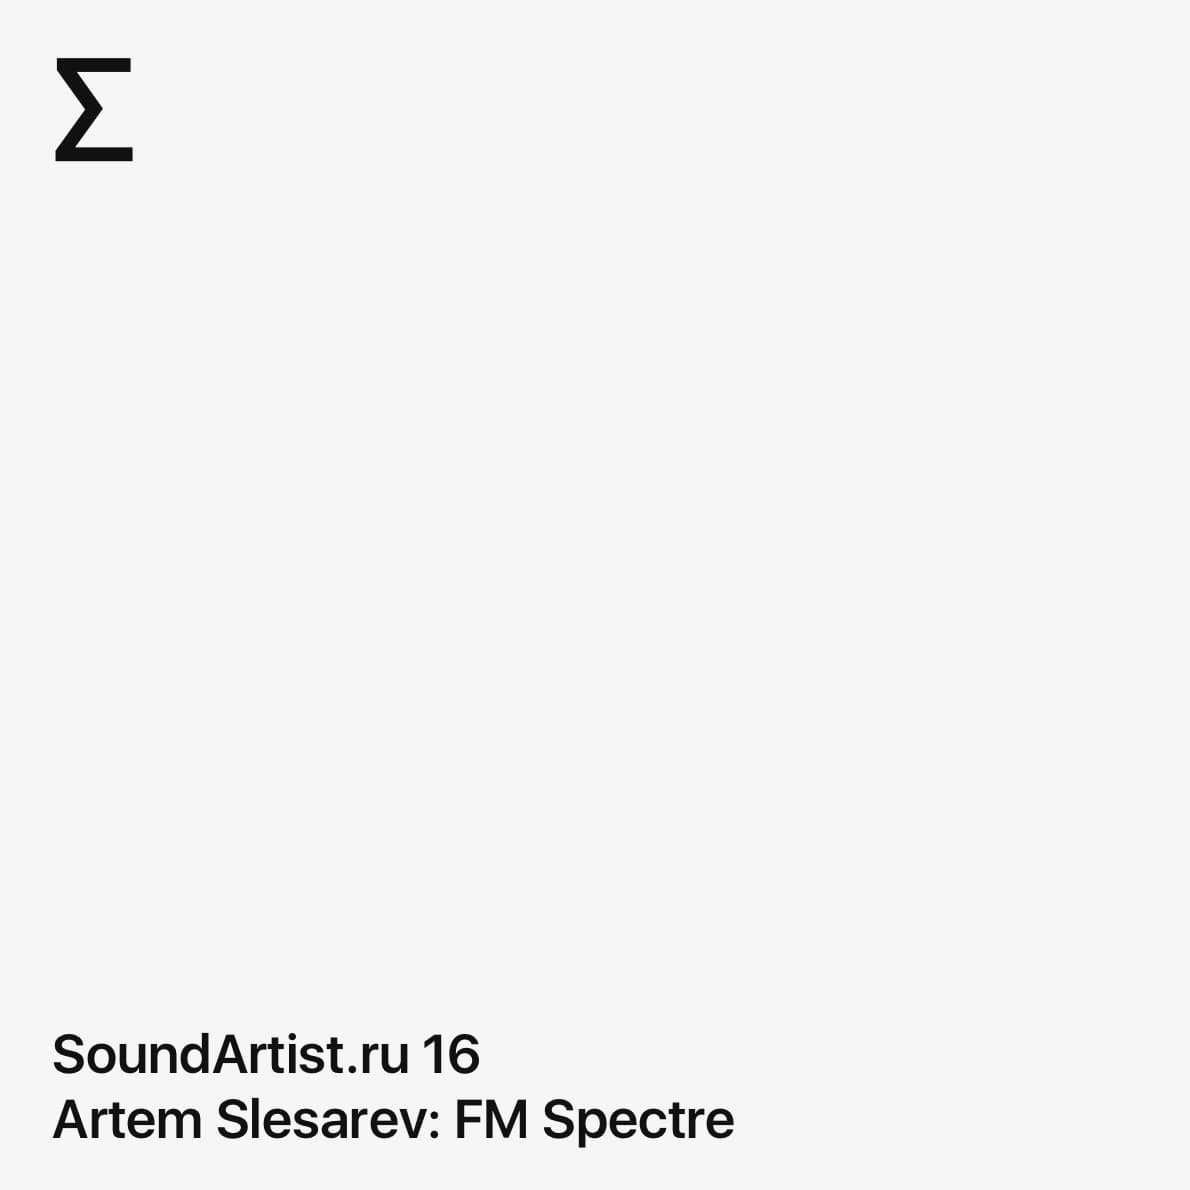 SoundArtist.ru 16 – Artem Slesarev: FM Spectre